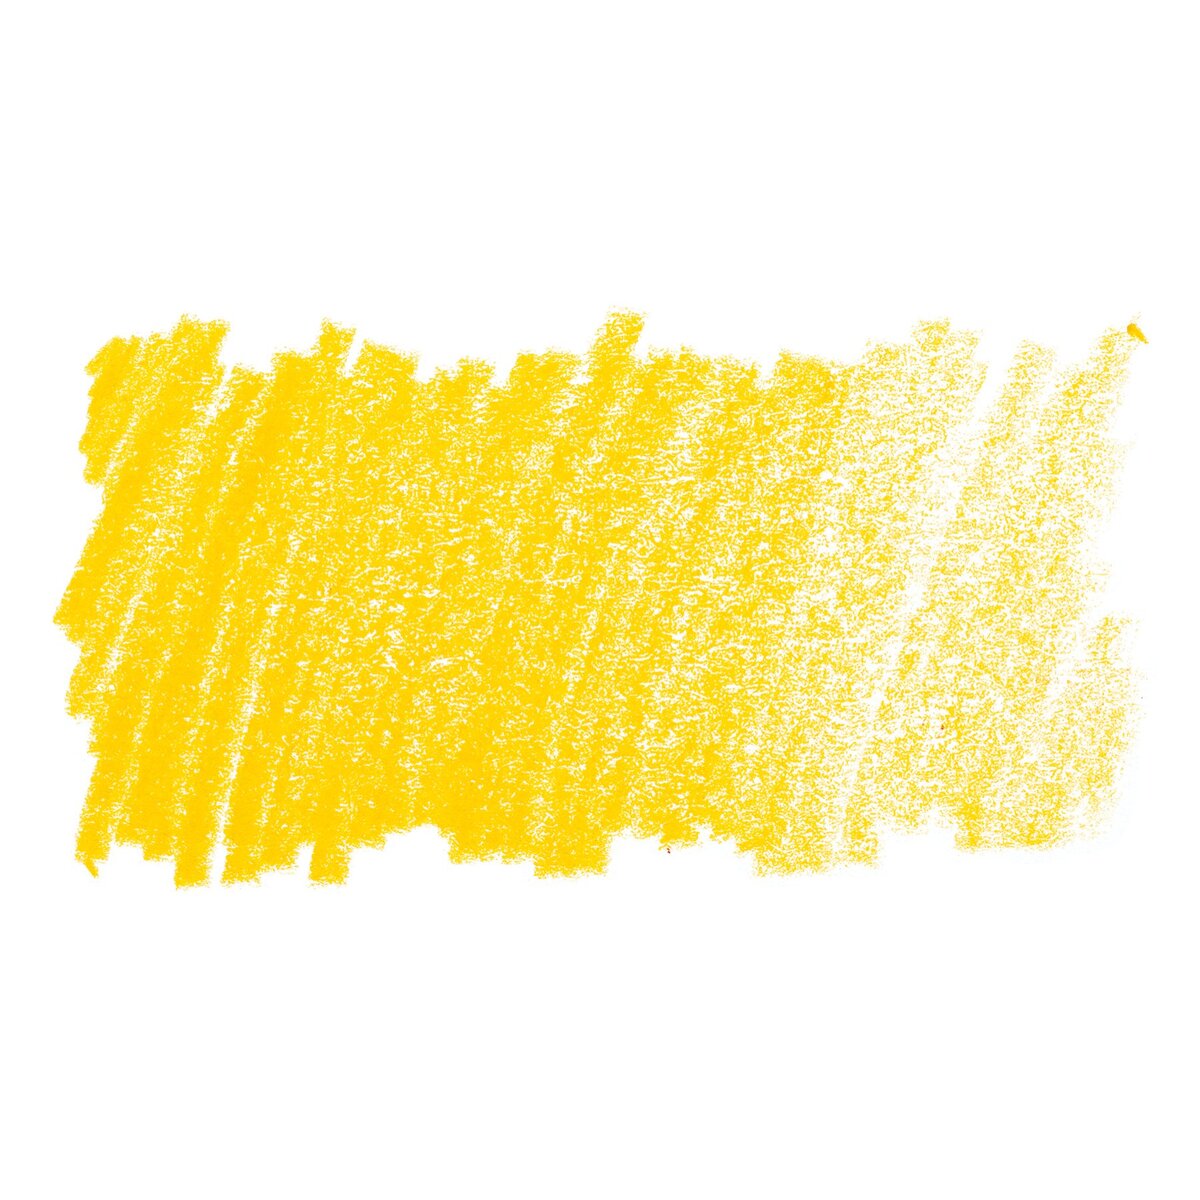 Faber Castell Polychromos Zinc Yellow - RISD Store